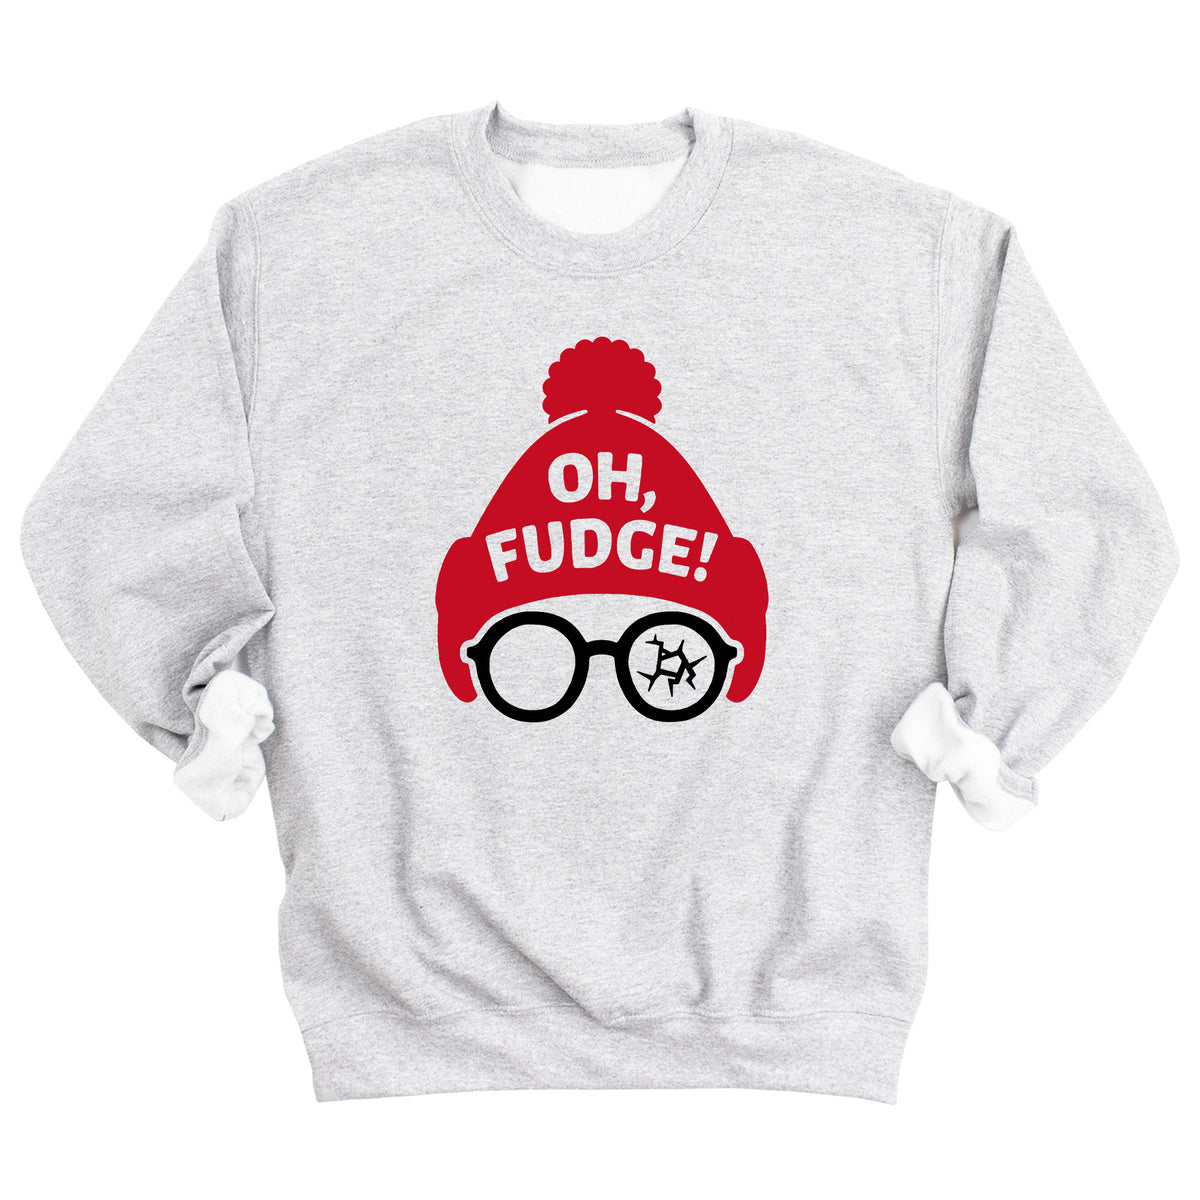 Oh, Fudge! Sweatshirt